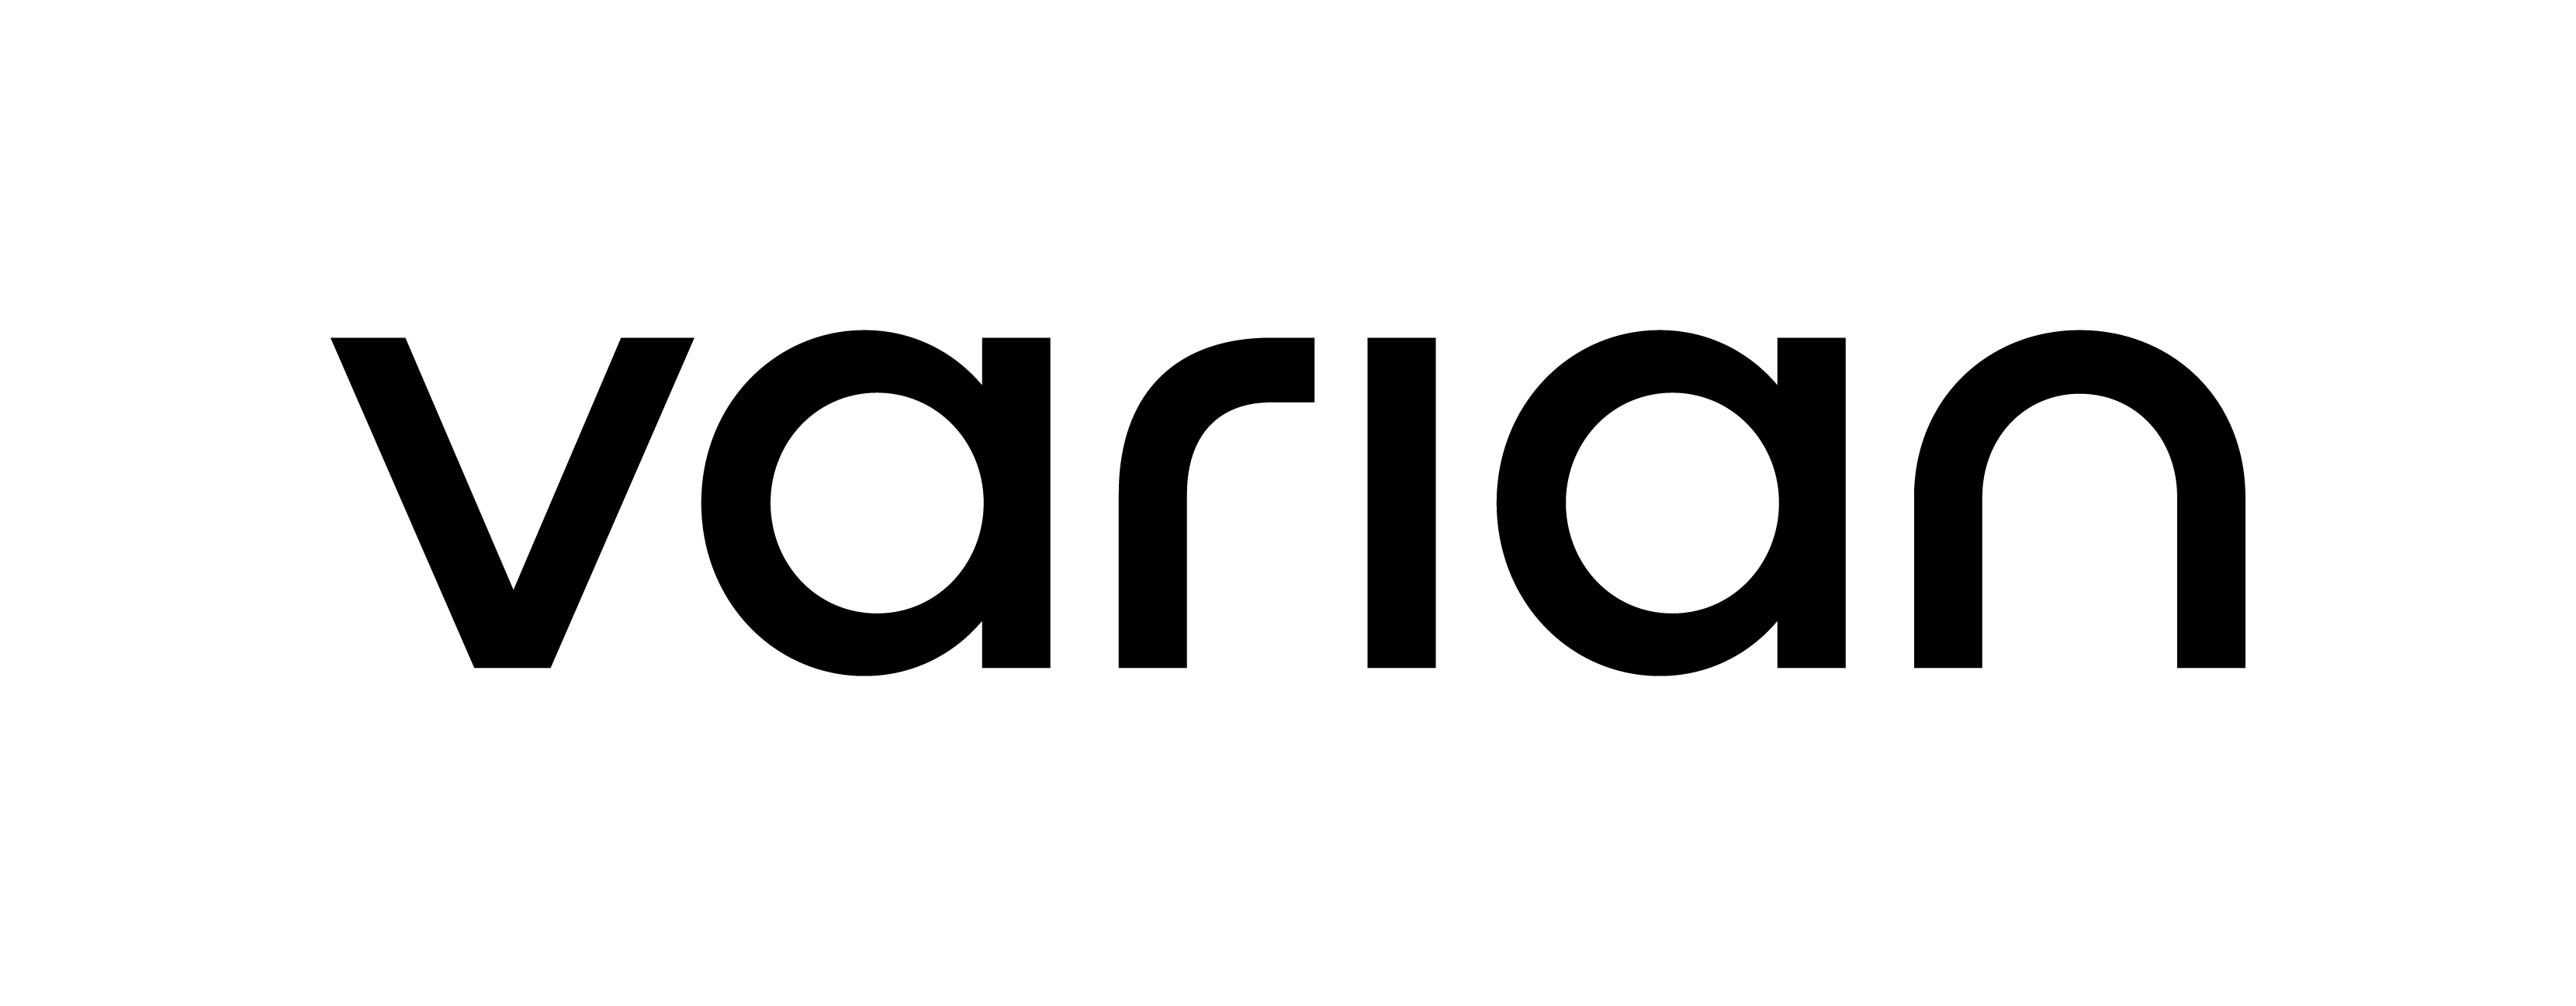 Varian Logo - File:Varian company logo 2017.png - Wikimedia Commons